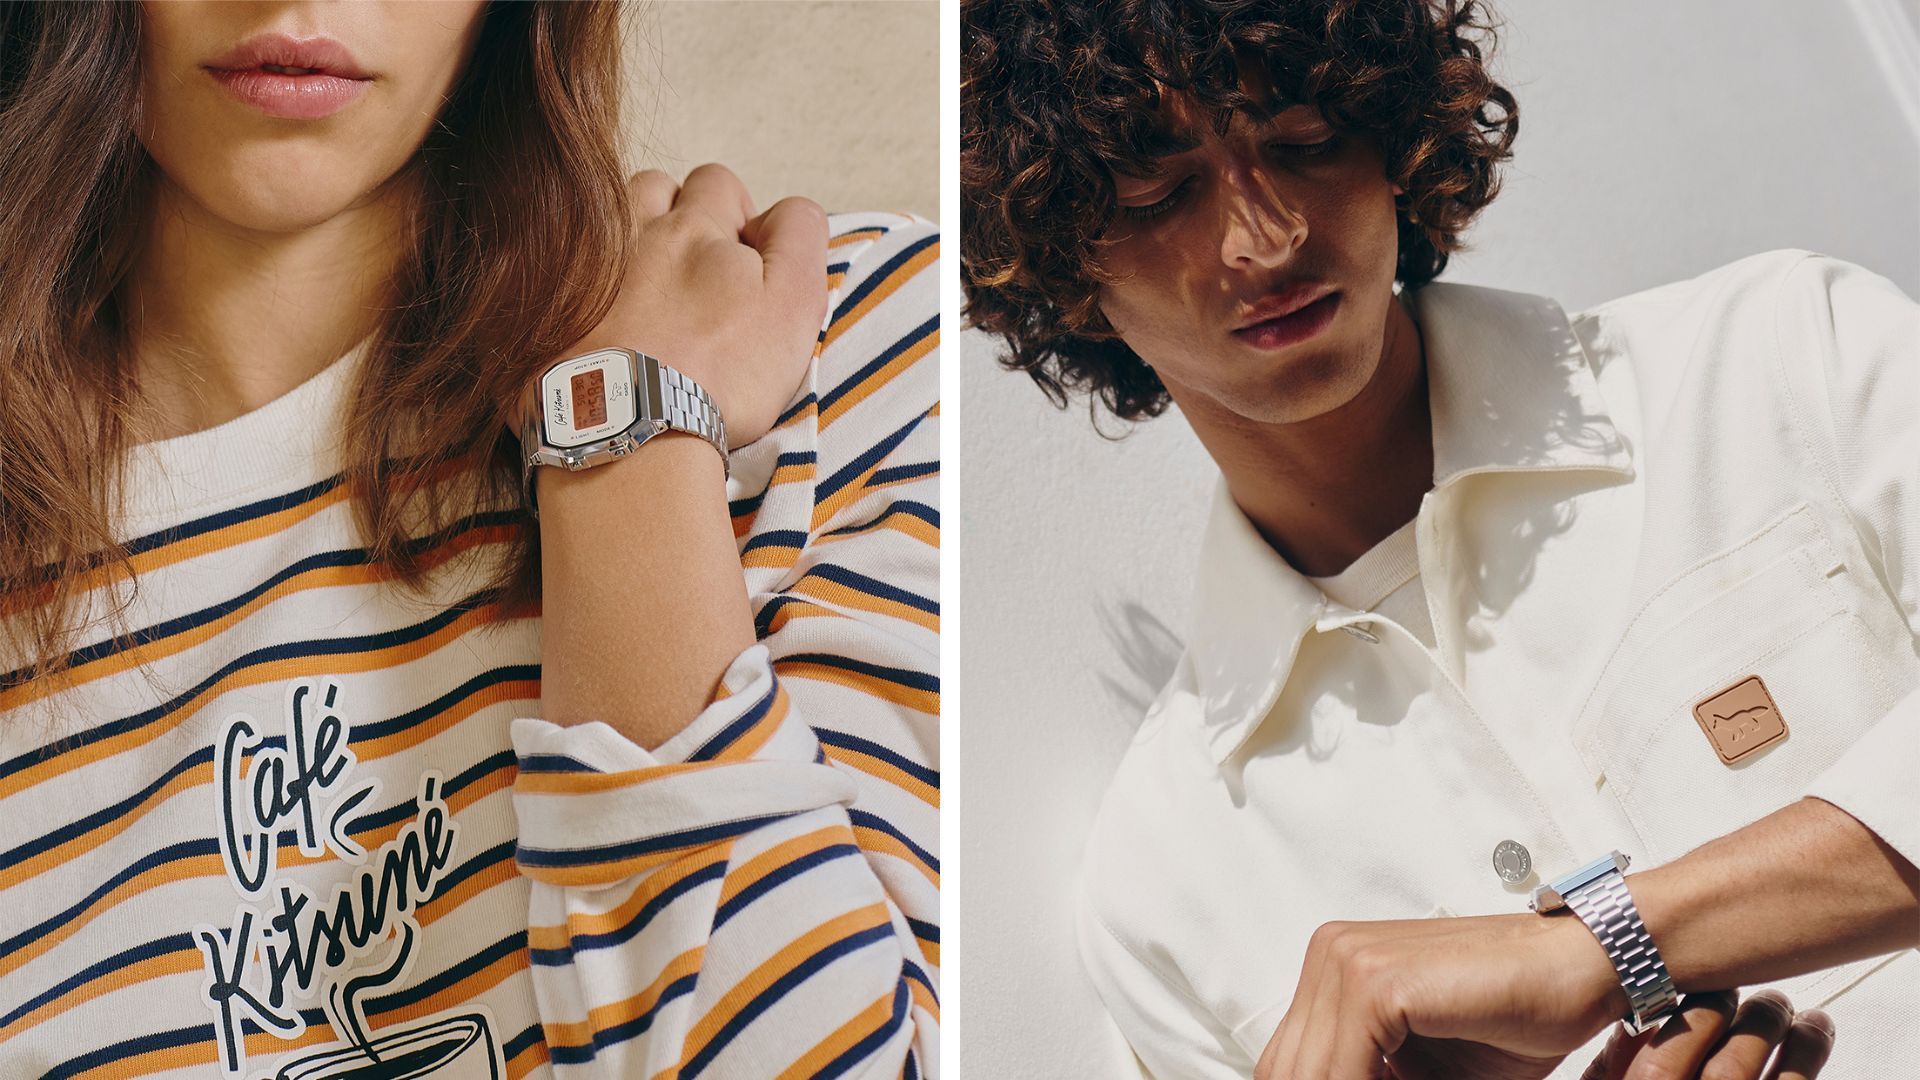 Café Kitsuné And Casio Collaborate To Create New A168 Timepieces